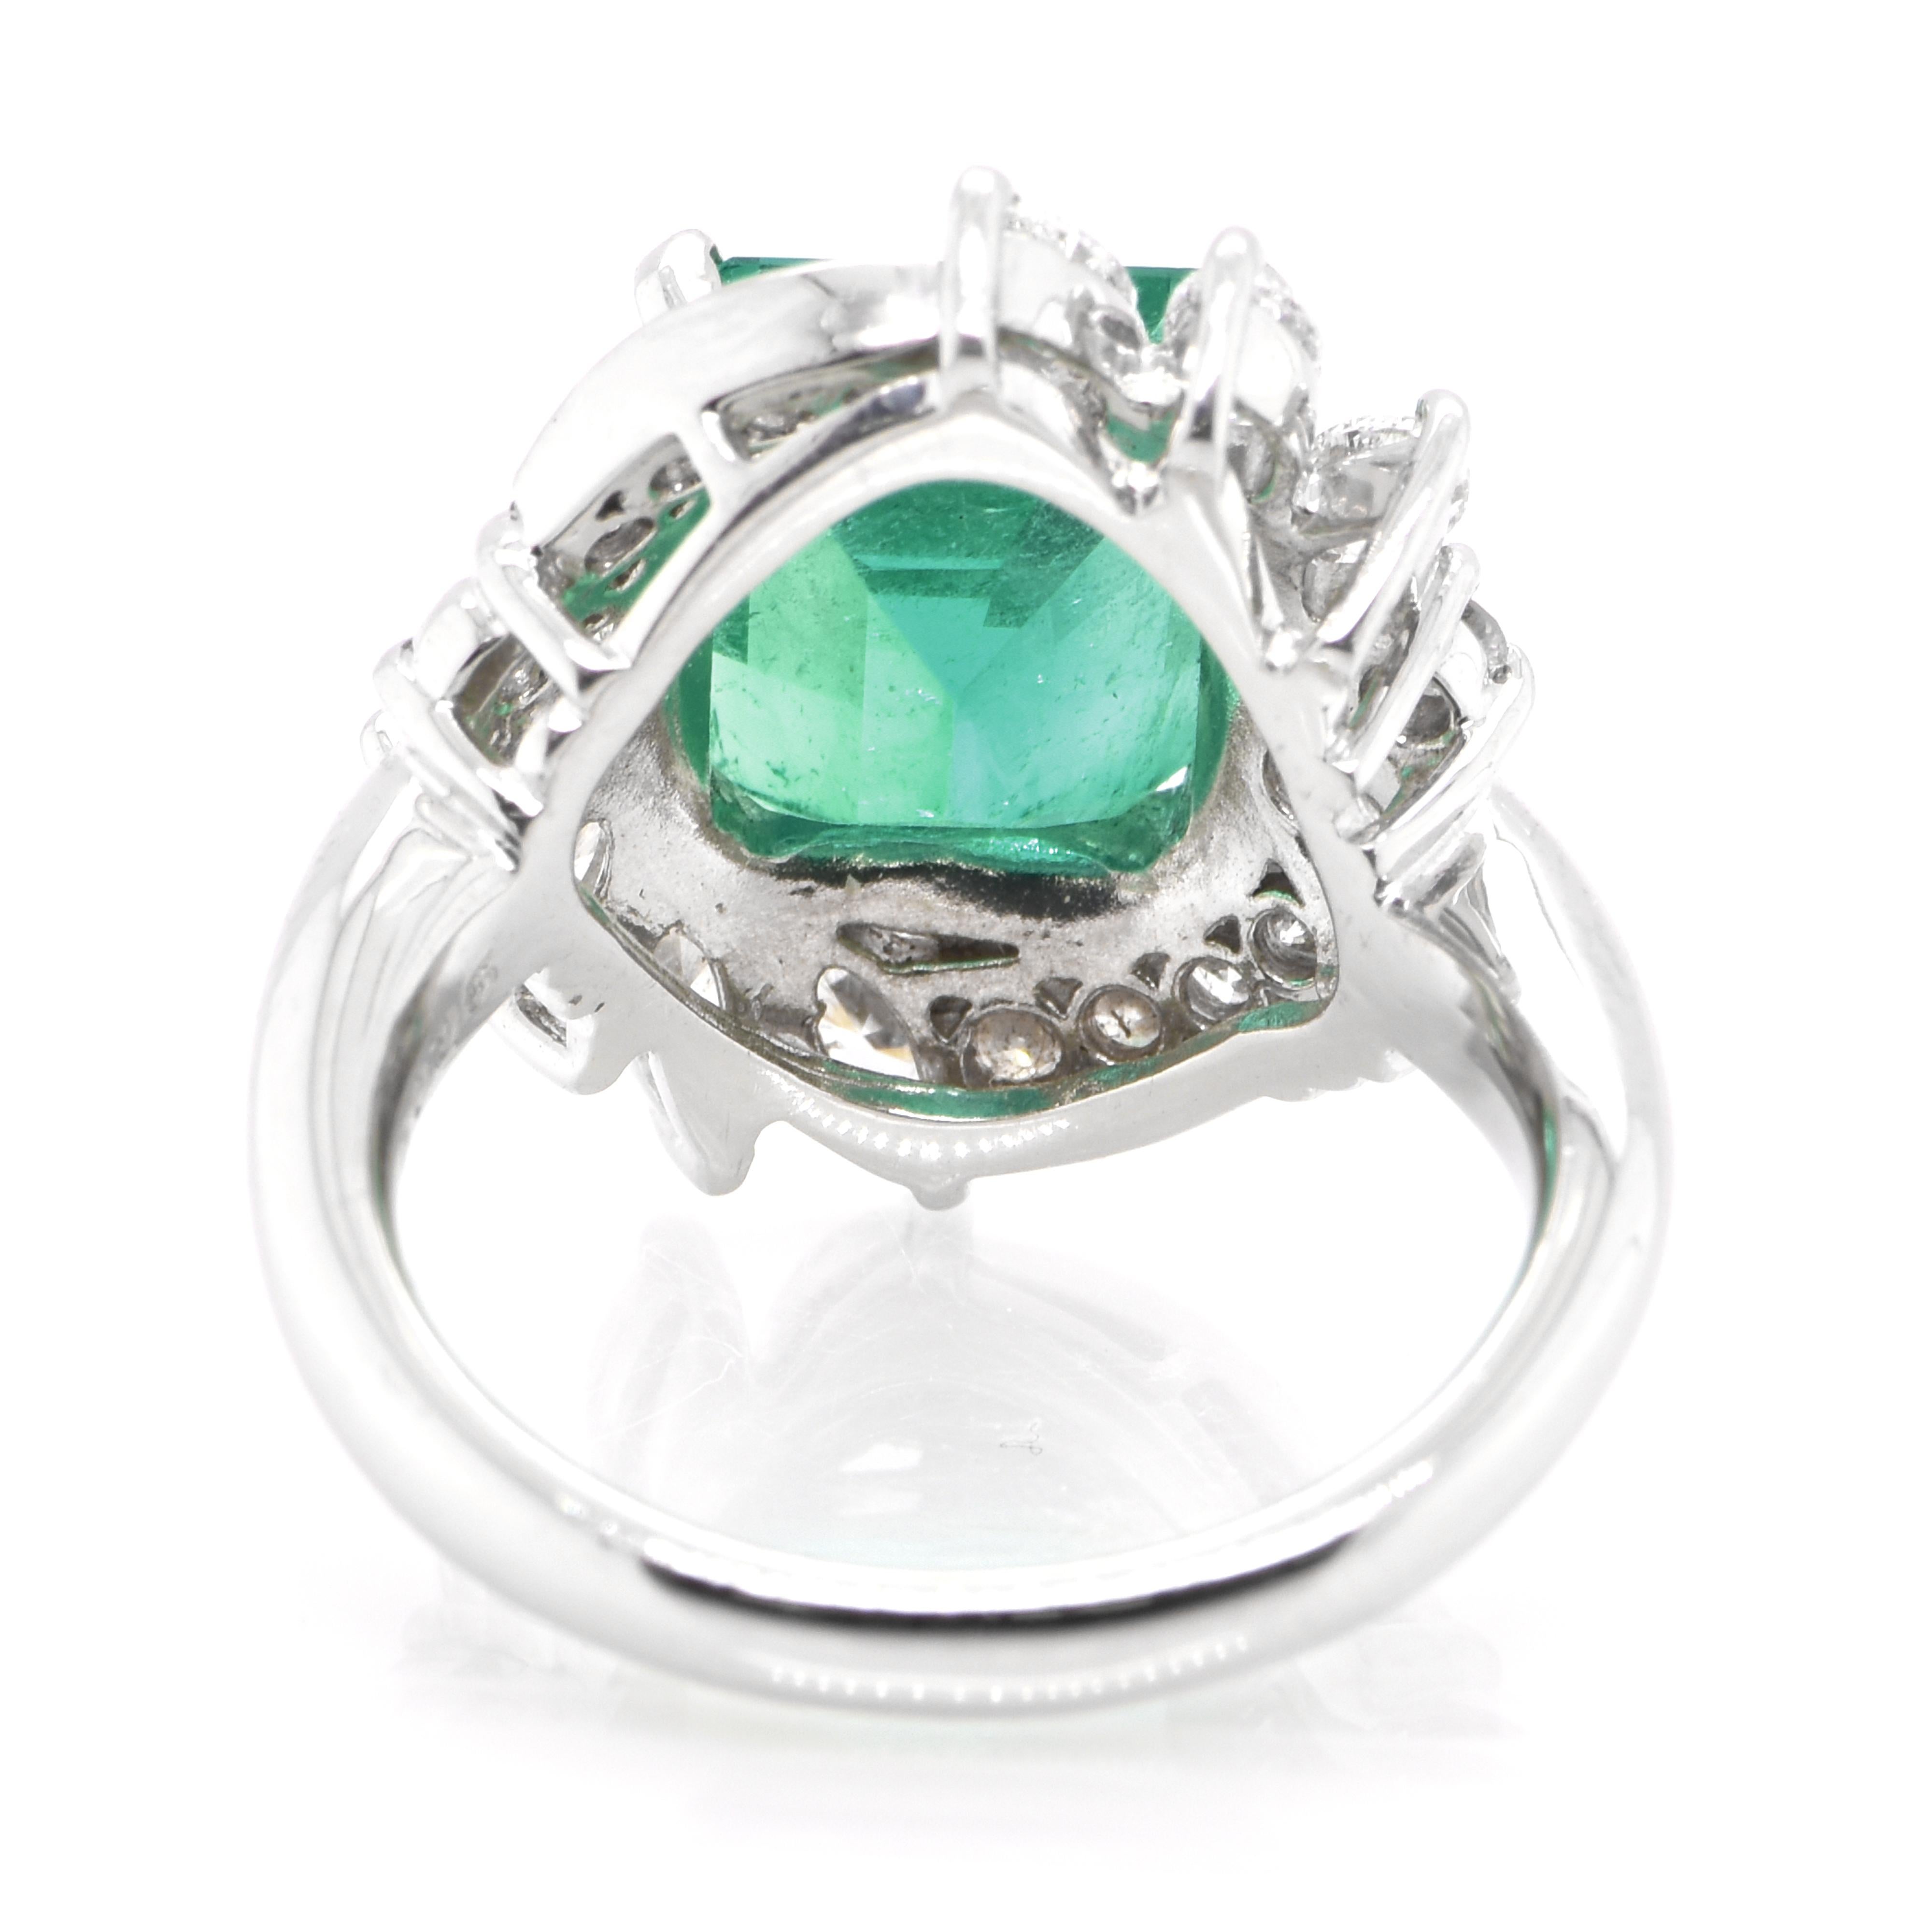 Women's 3.41 Carat Natural Emerald and Diamond Estate Ring Set in Platinum